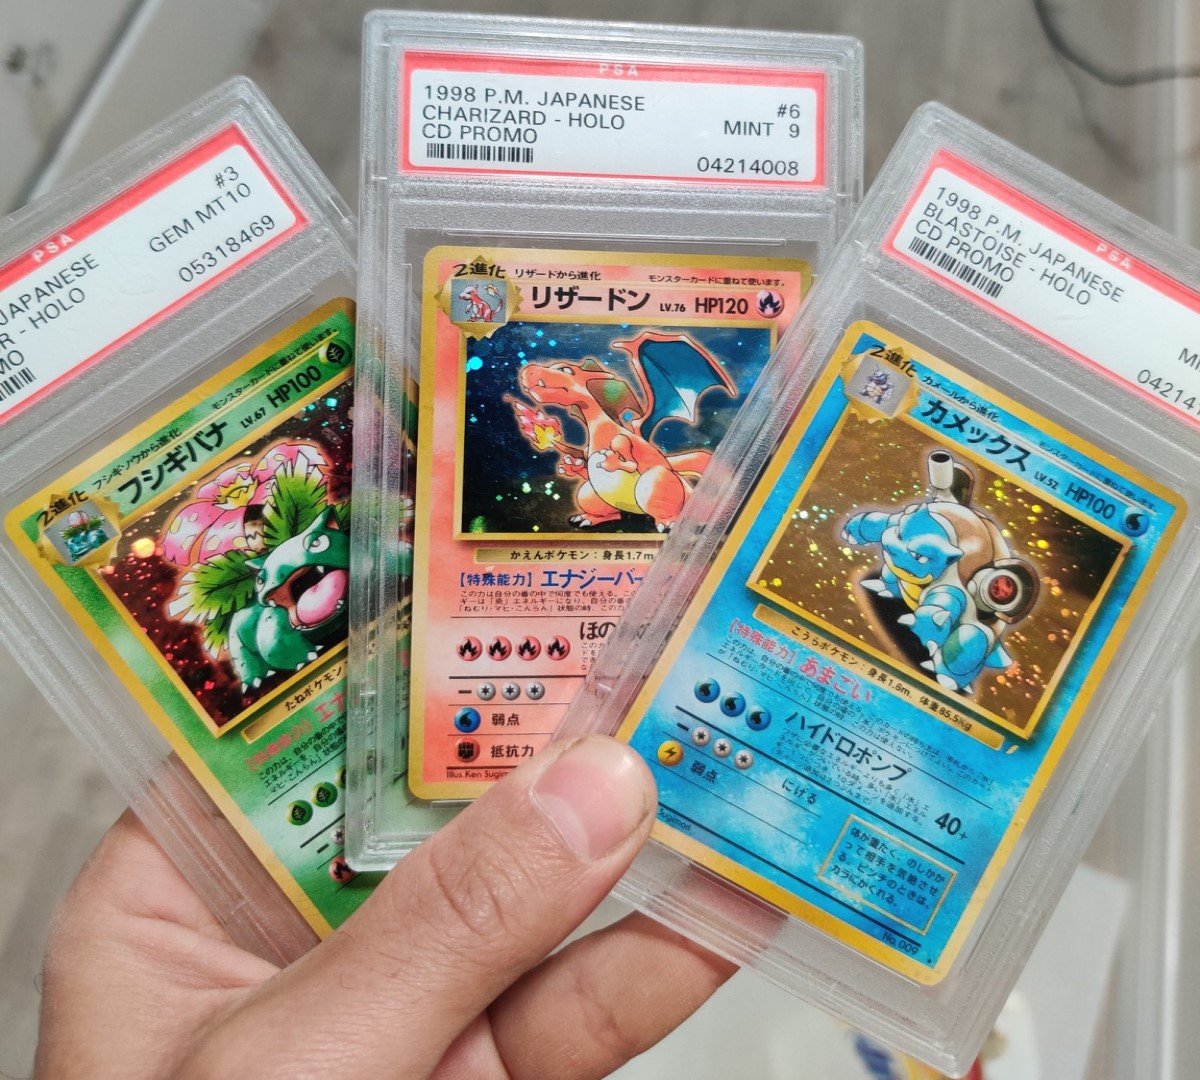 Three sealed Pokemon Trading Cards